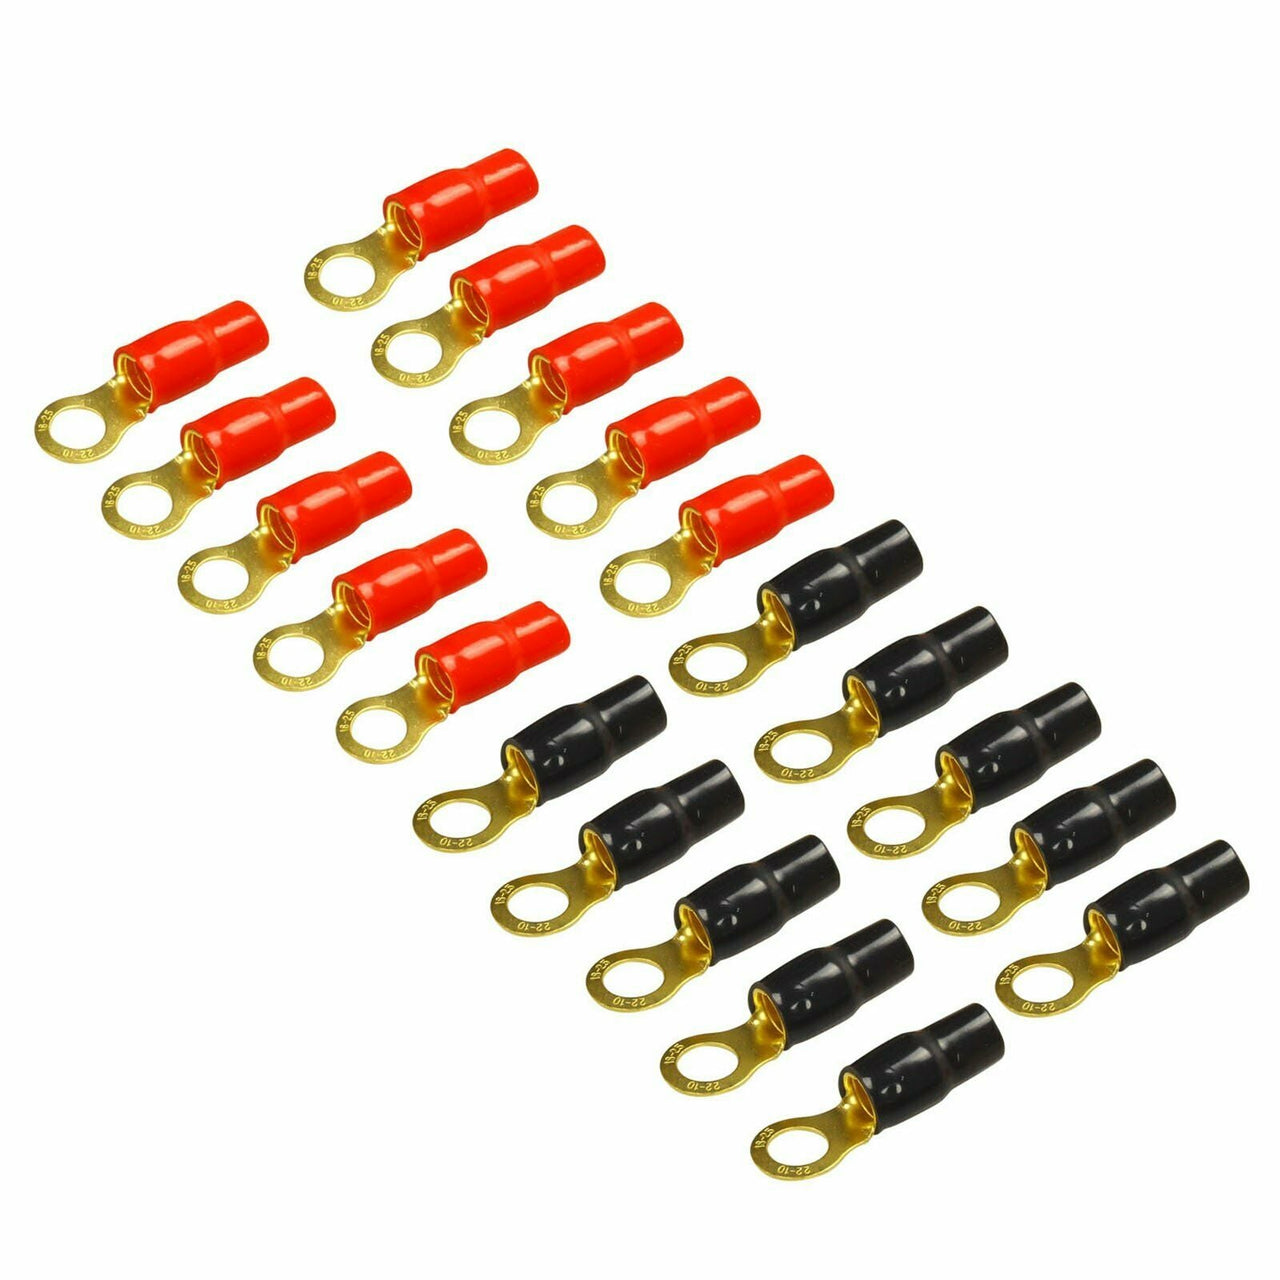 Absolute GRT8-20 8 Gauge Crimp Ring Terminals Connectors 20-Pack (Red Black)